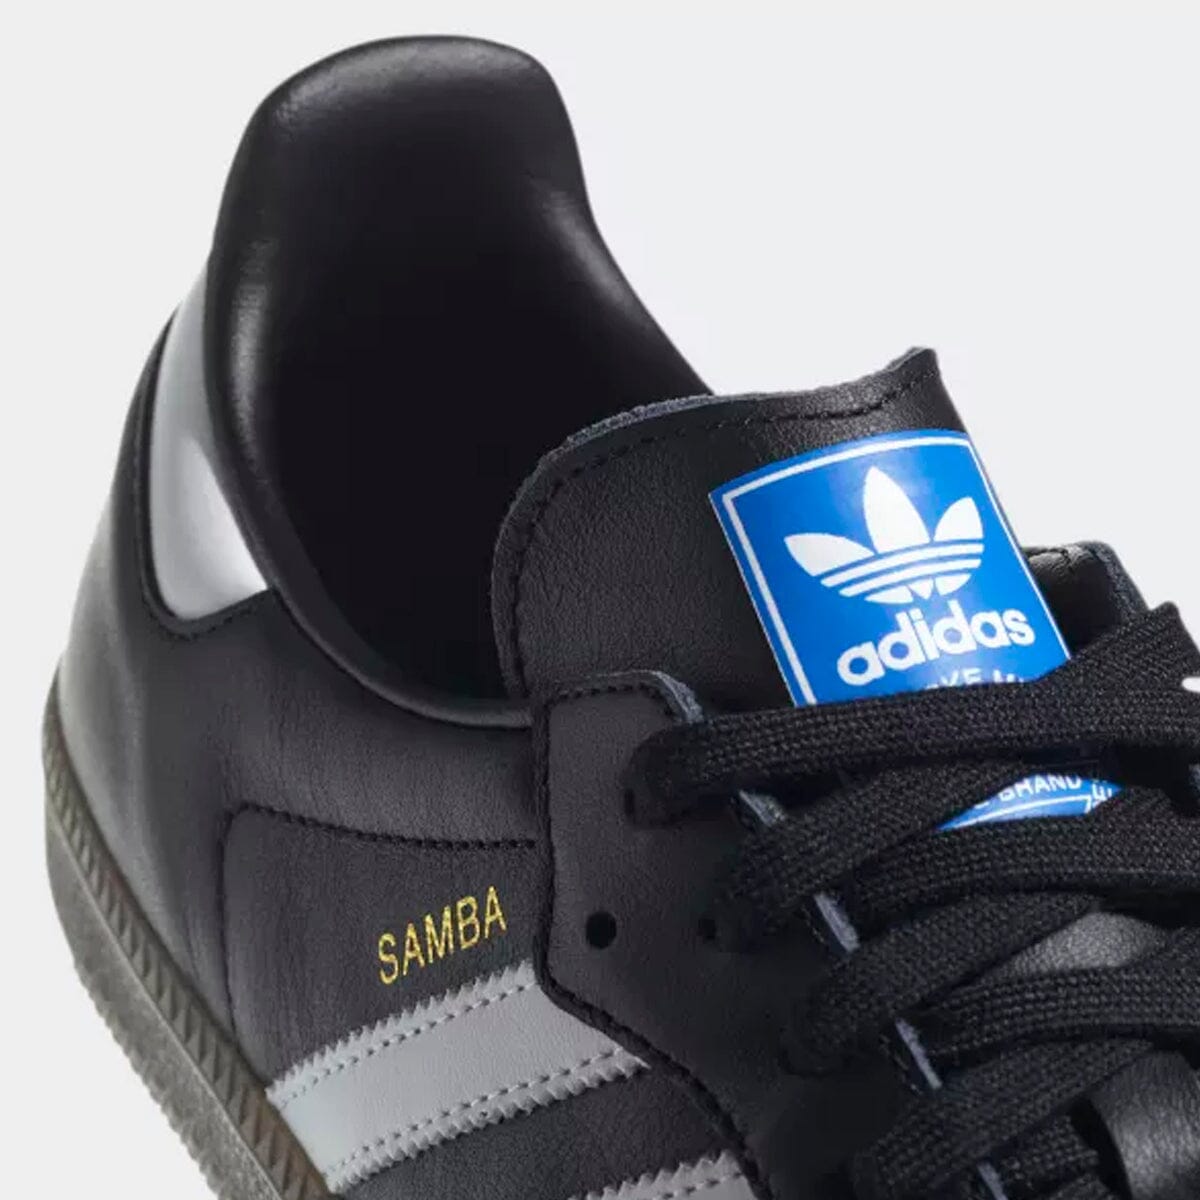 Adidas Samba OG Black Gum Adidas Samba Blizz Sneakers 